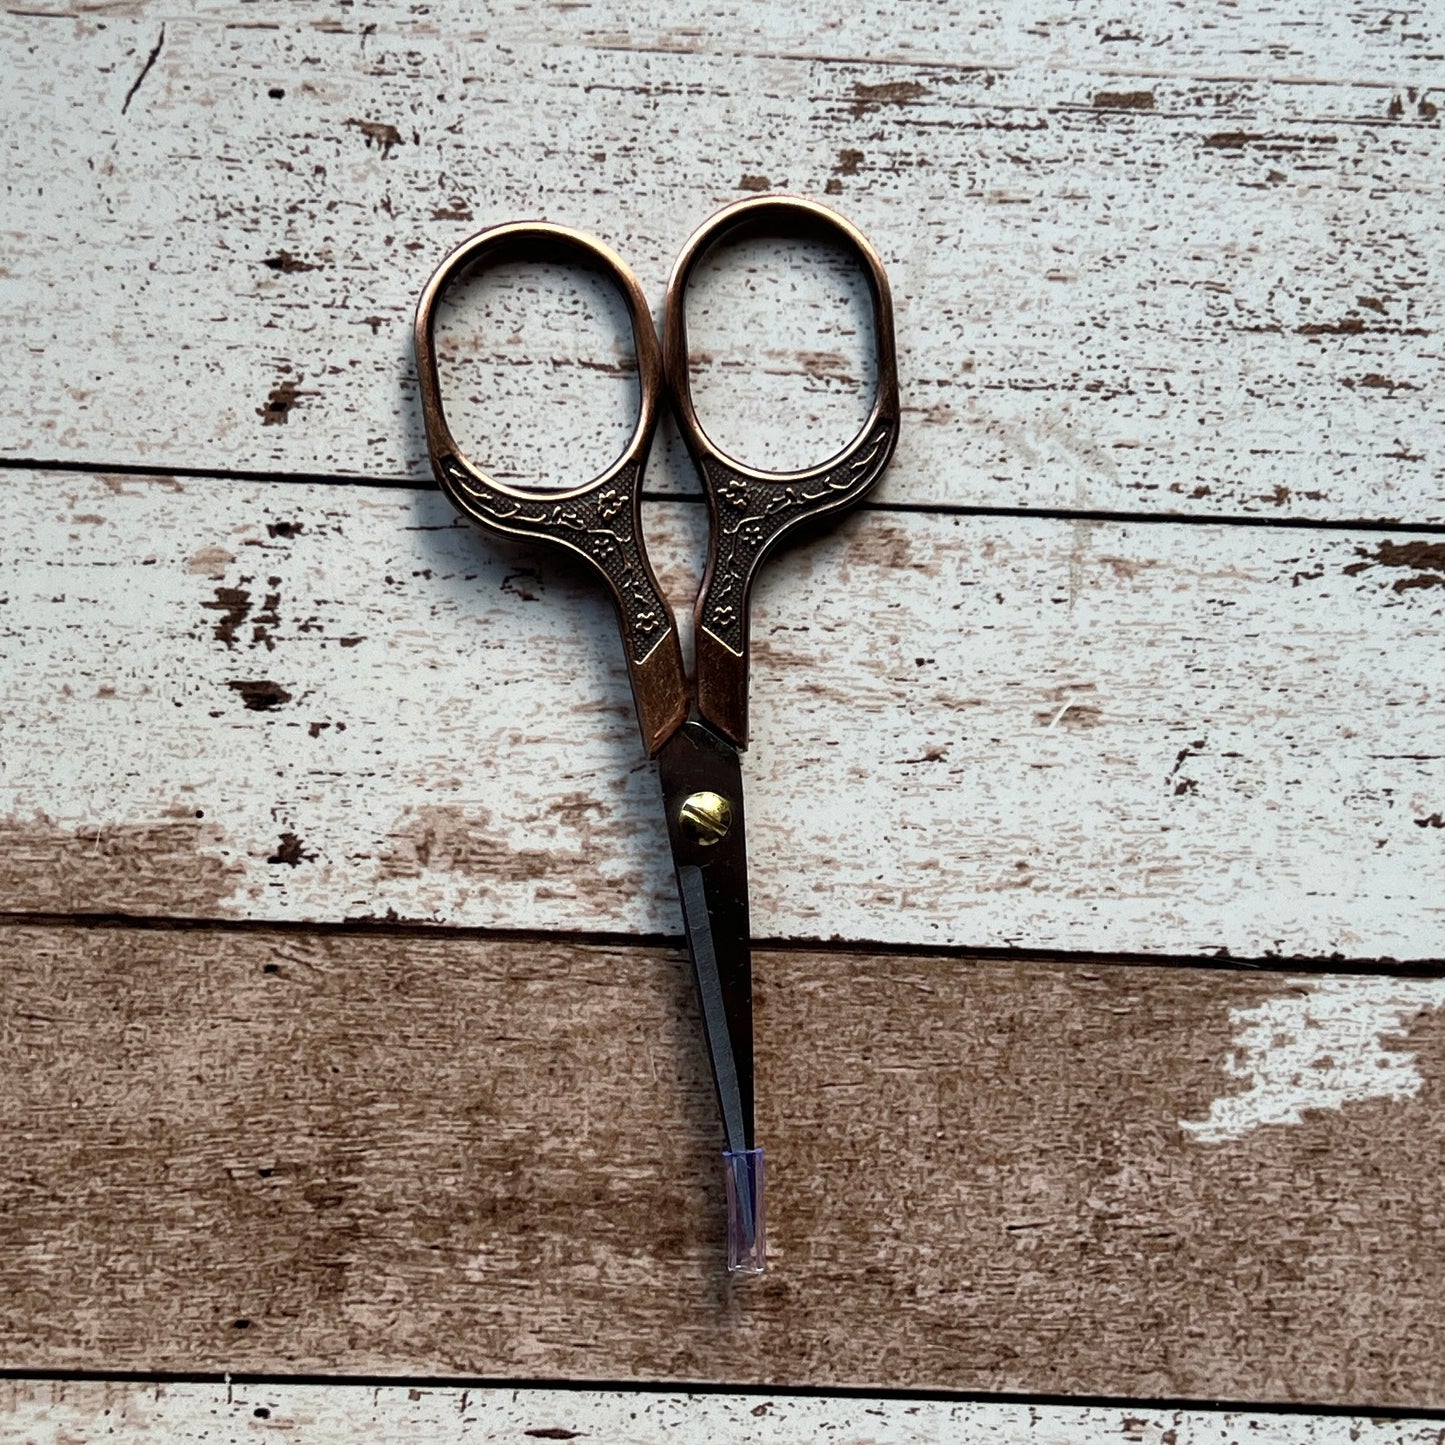 Vintage Embroidery Scissors